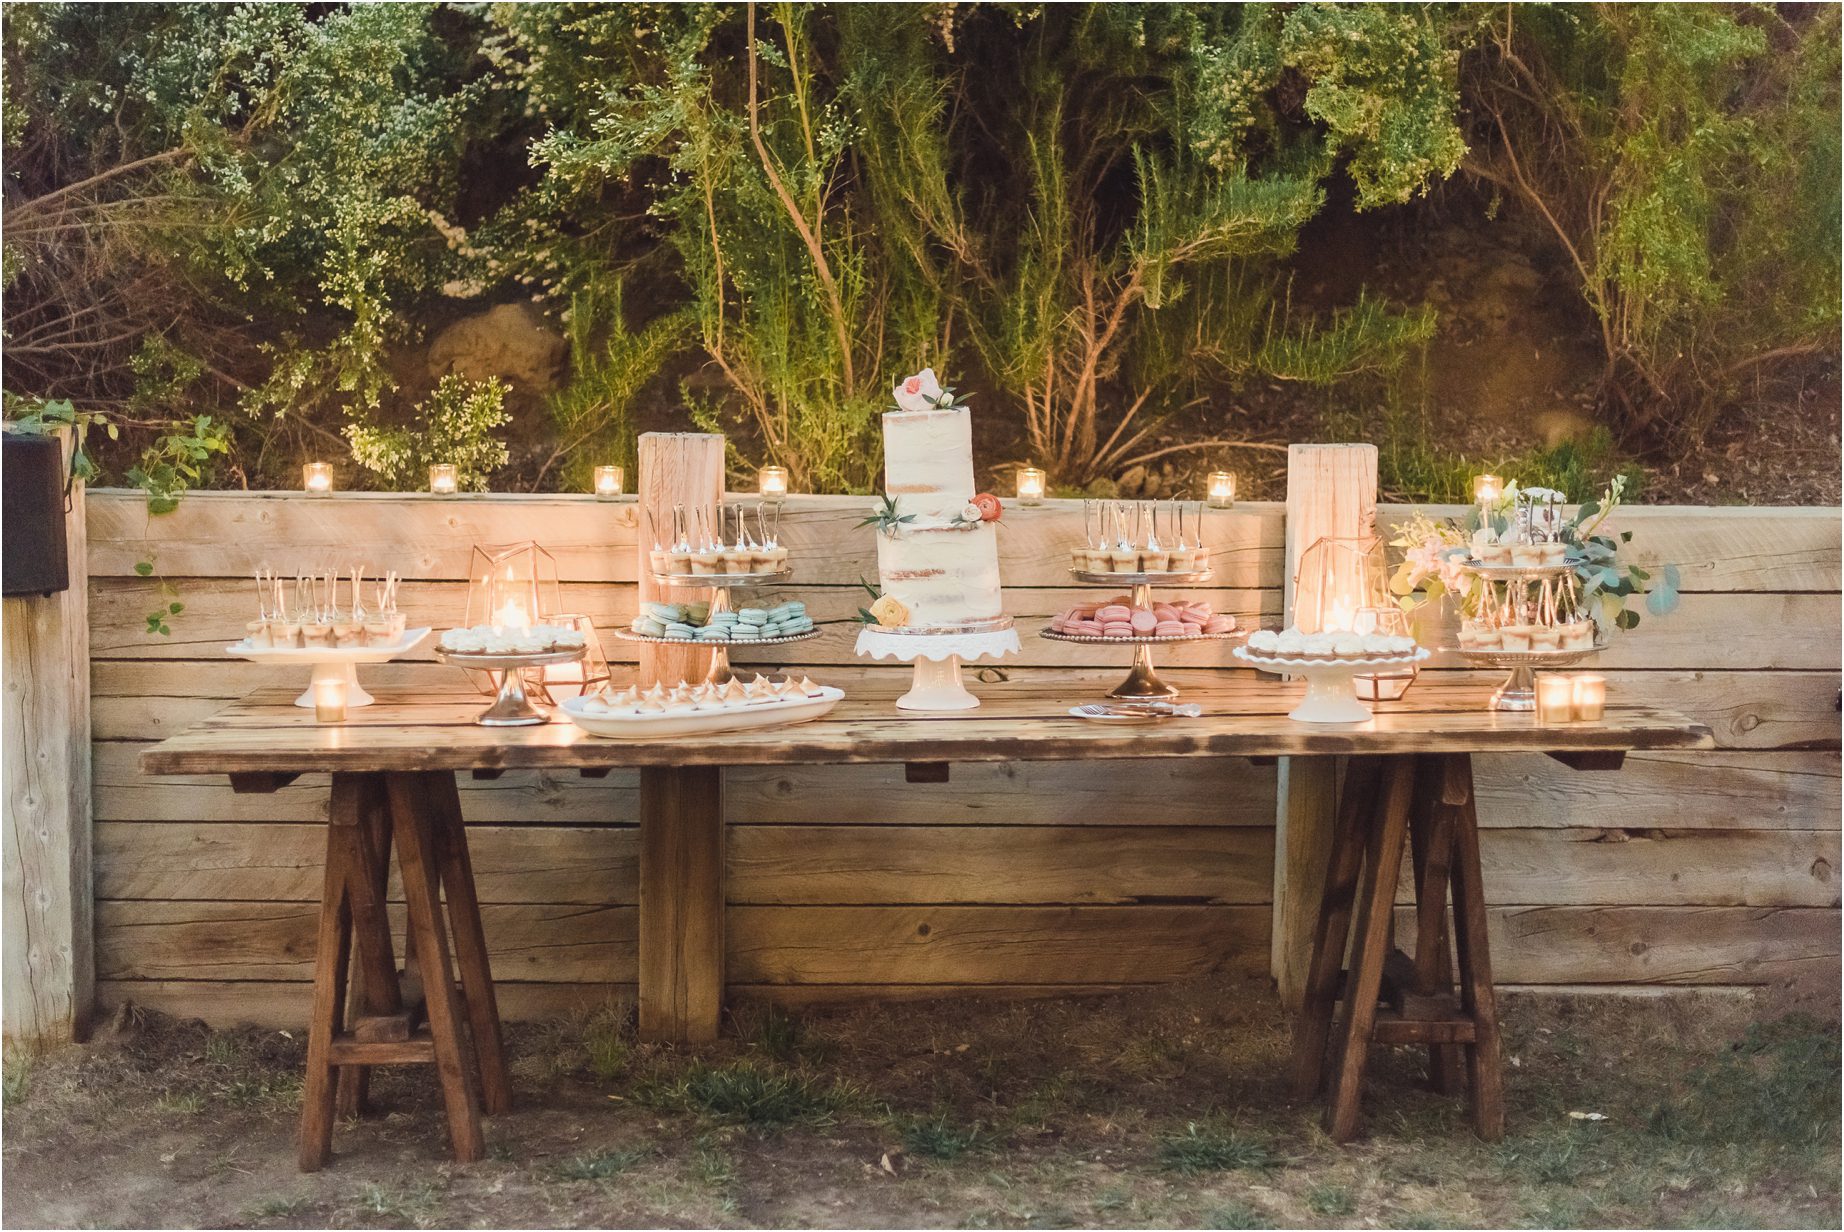 a wedding cake and favors at a Malibu wedding